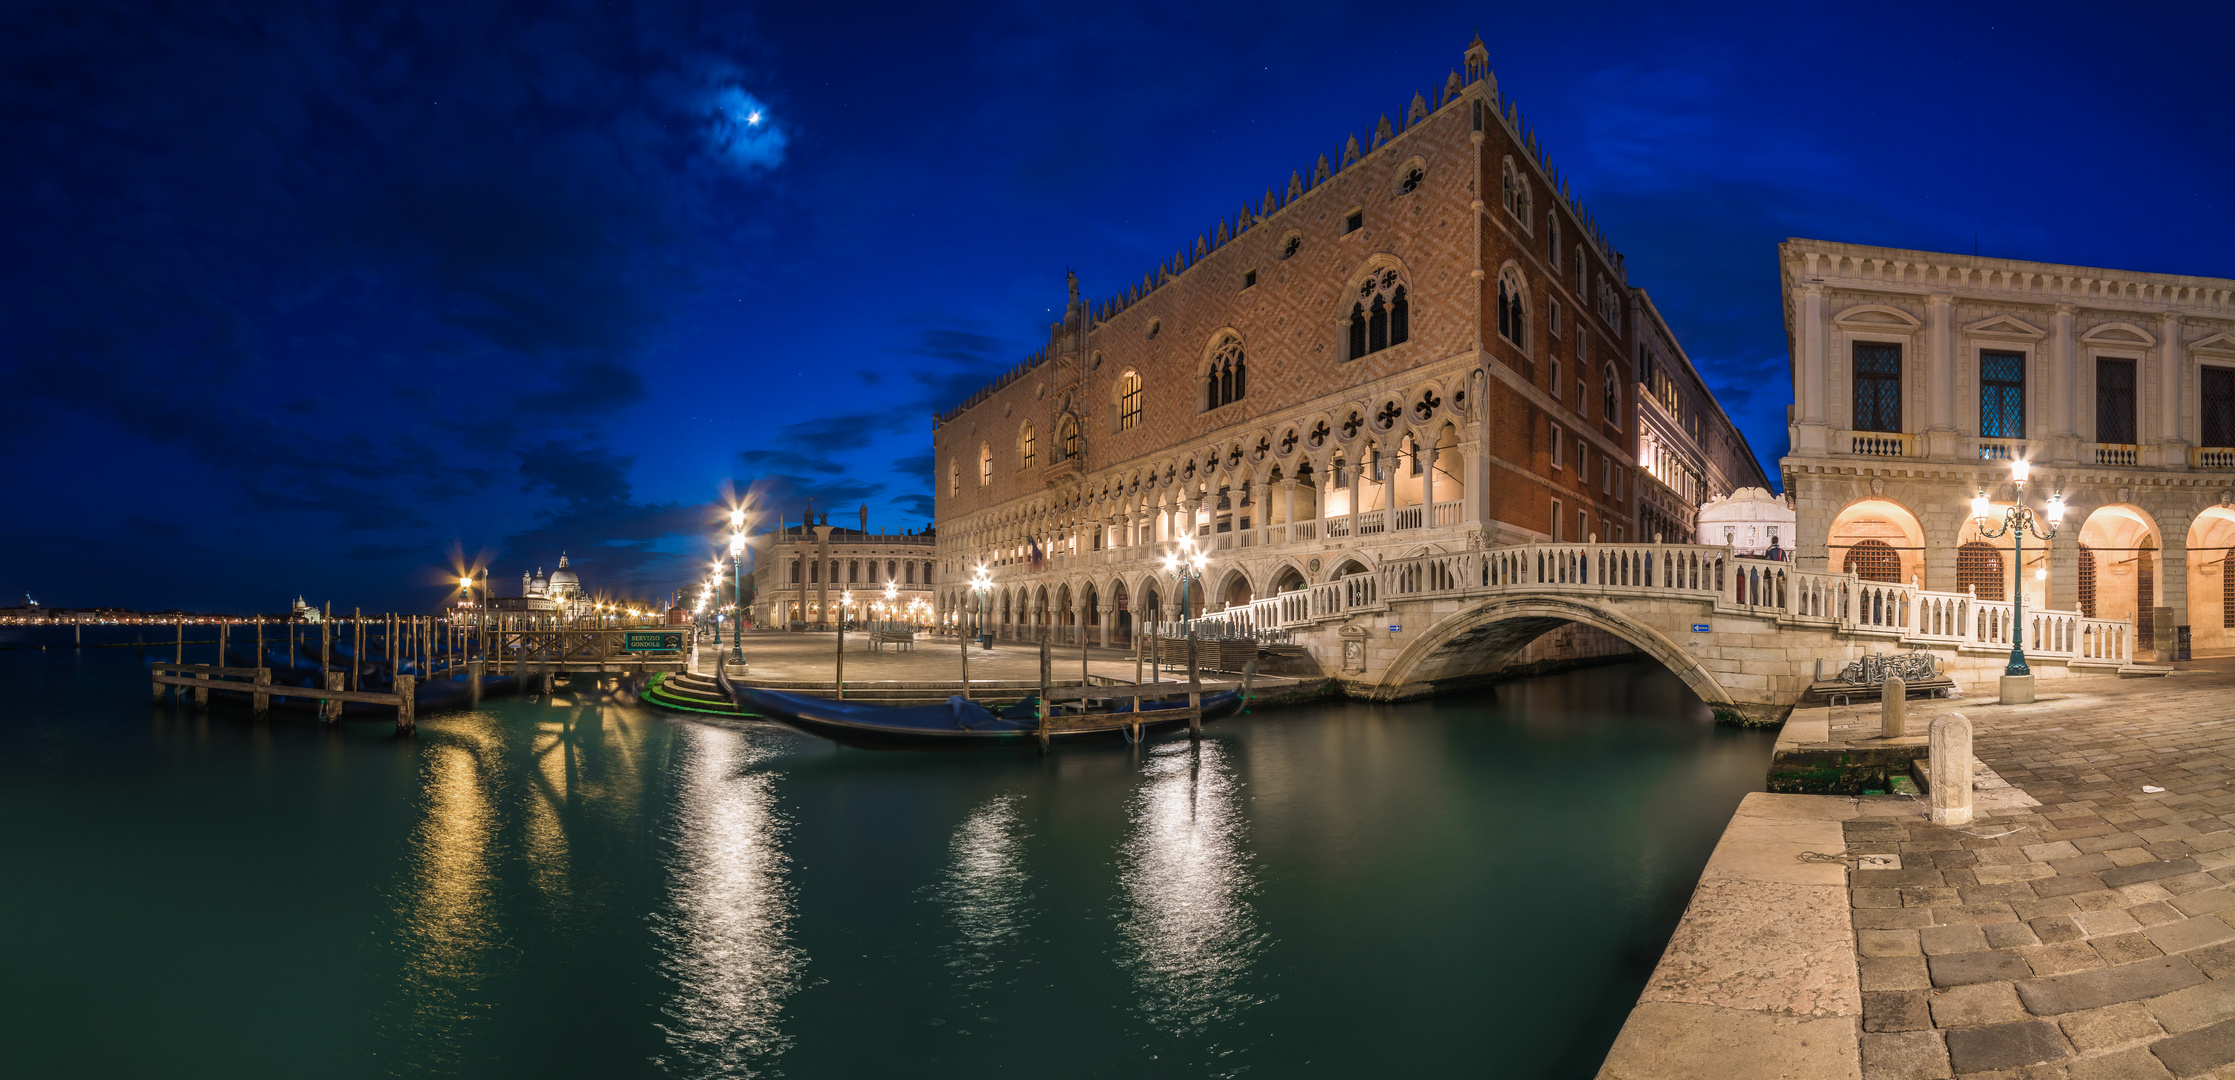 Venedig - Palazzo Ducale Panorama zur blauen Stunde